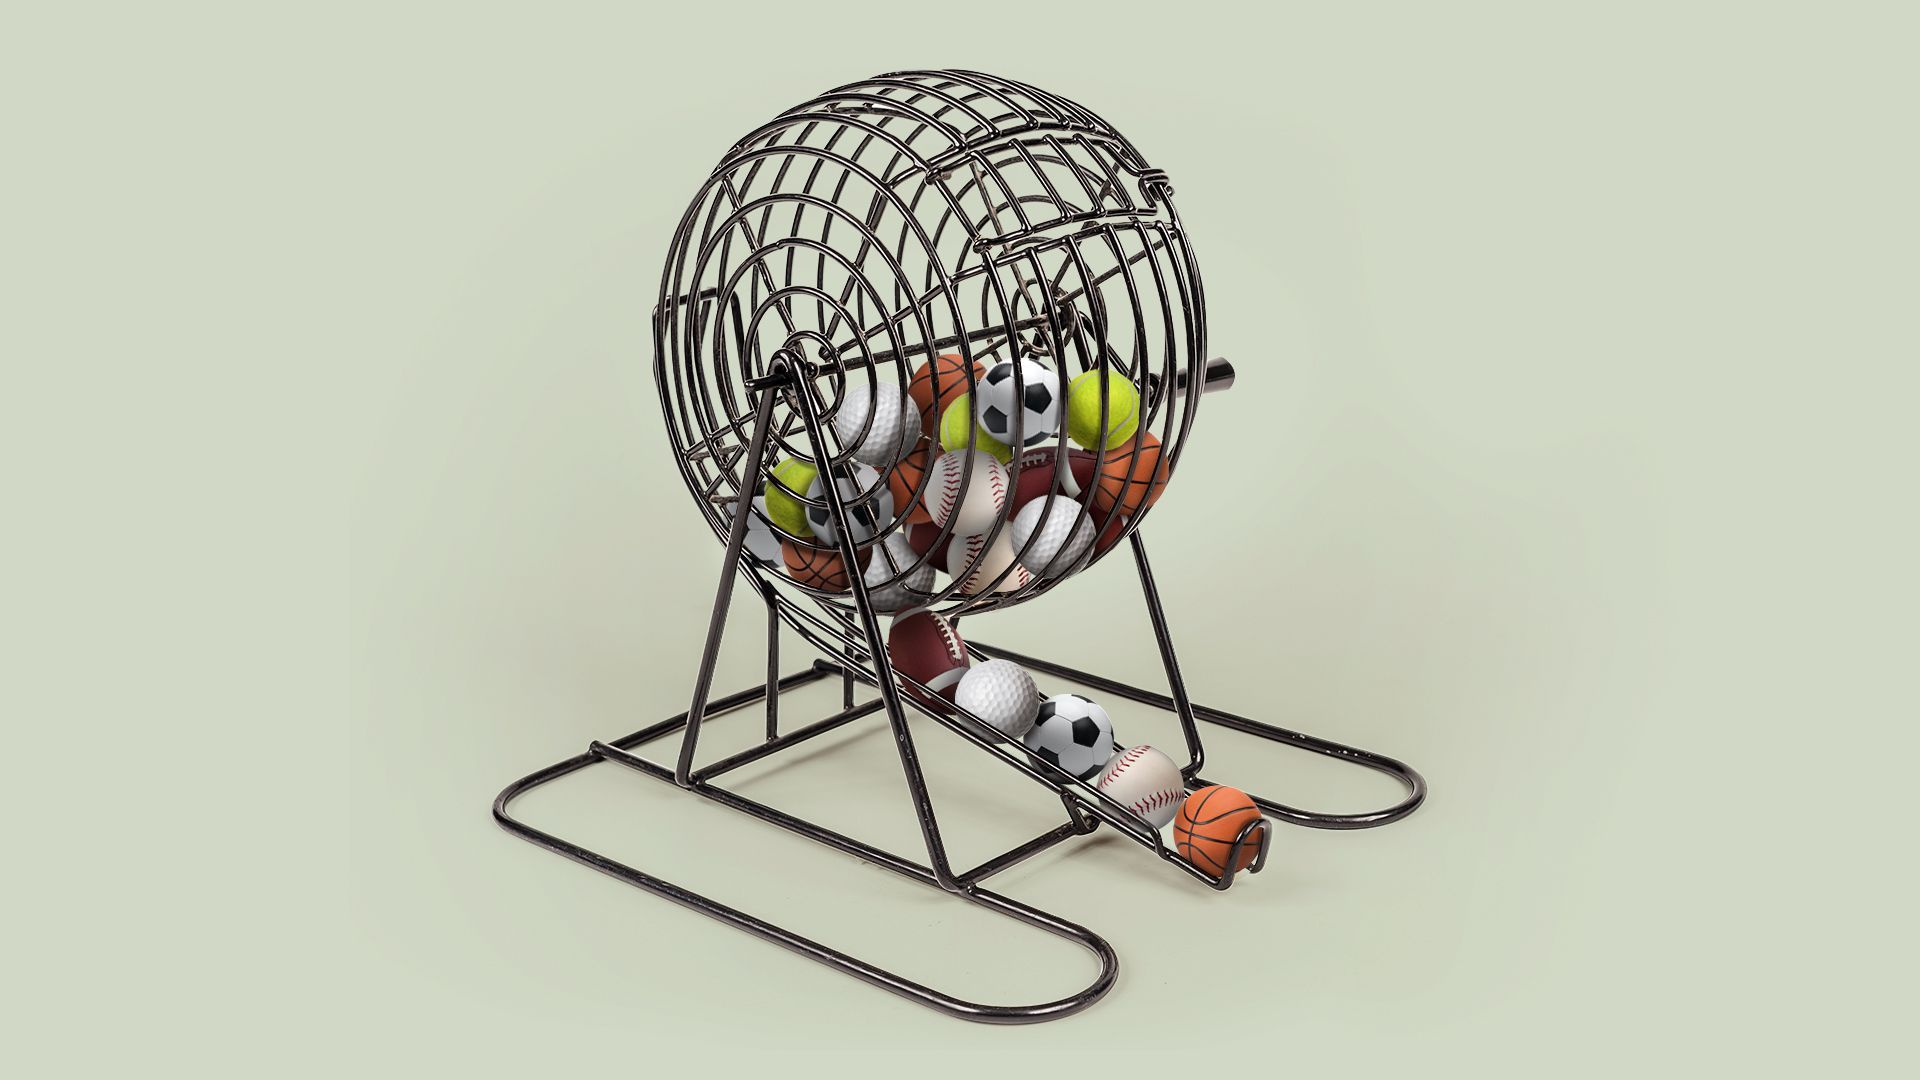 Illustration of a metal bingo ball cage full of small basketballs, baseballs, tennis balls, and footballs